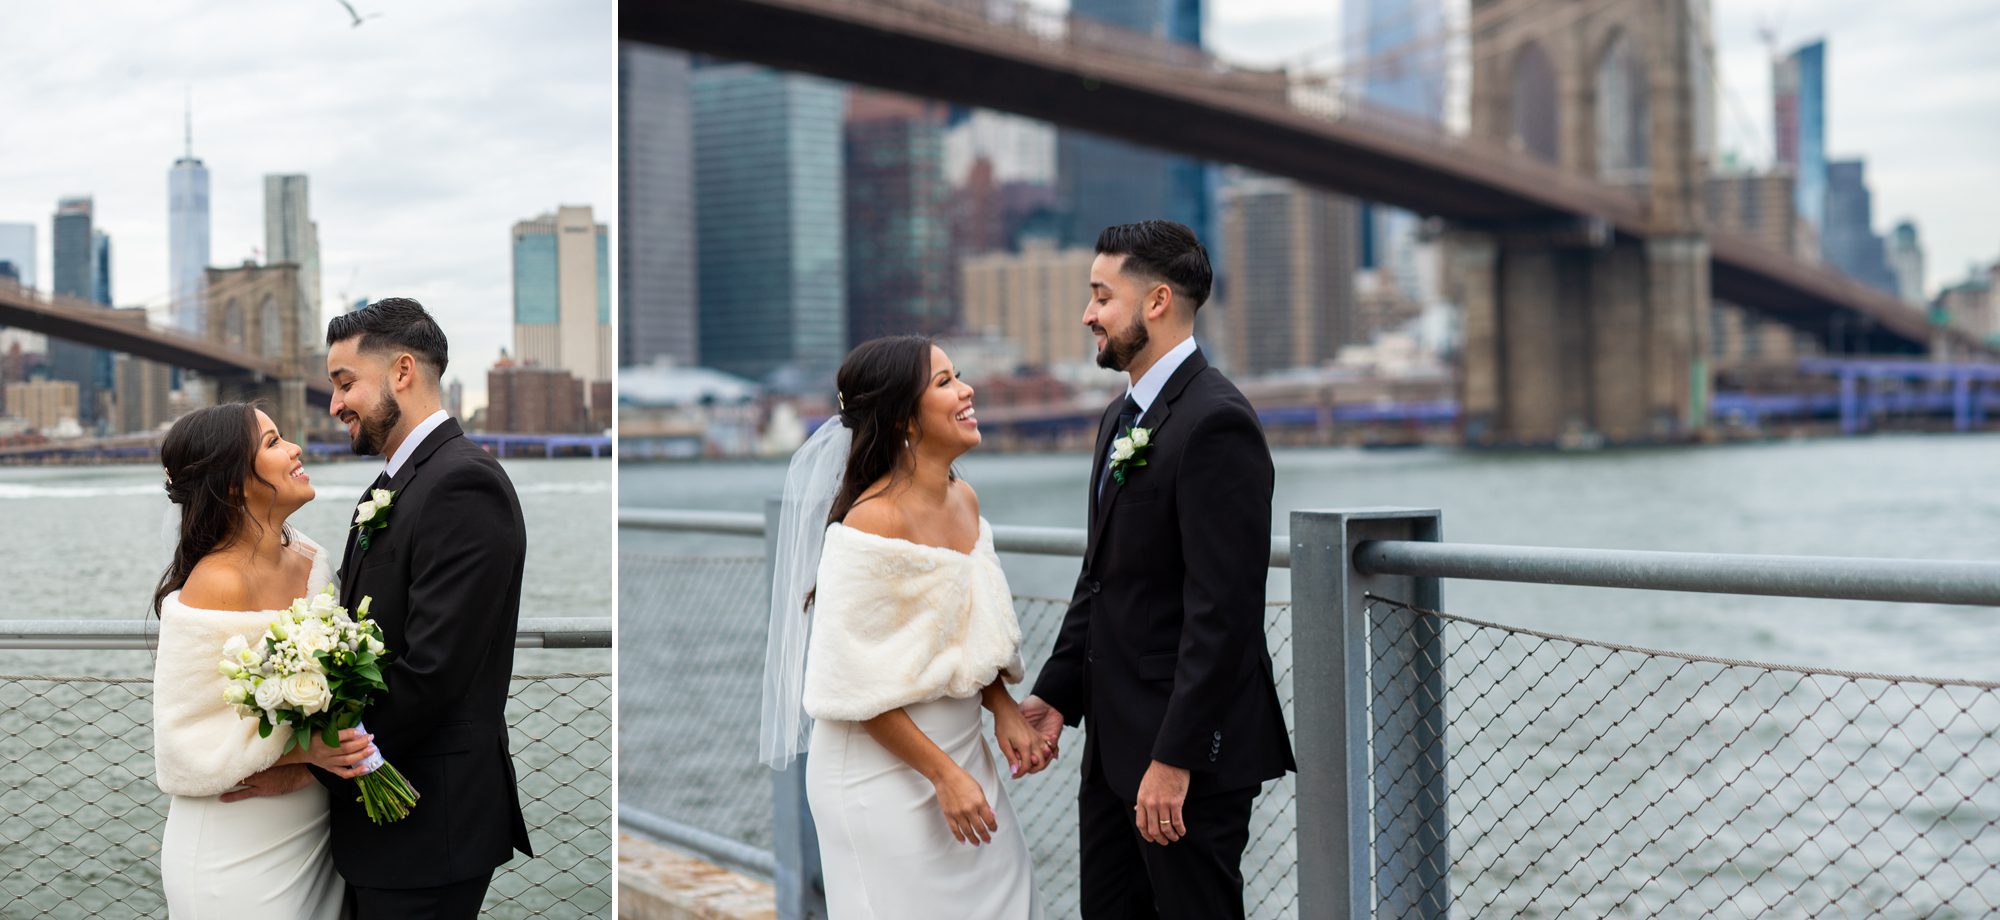 Brooklyn Bridge Park Wedding Photos 